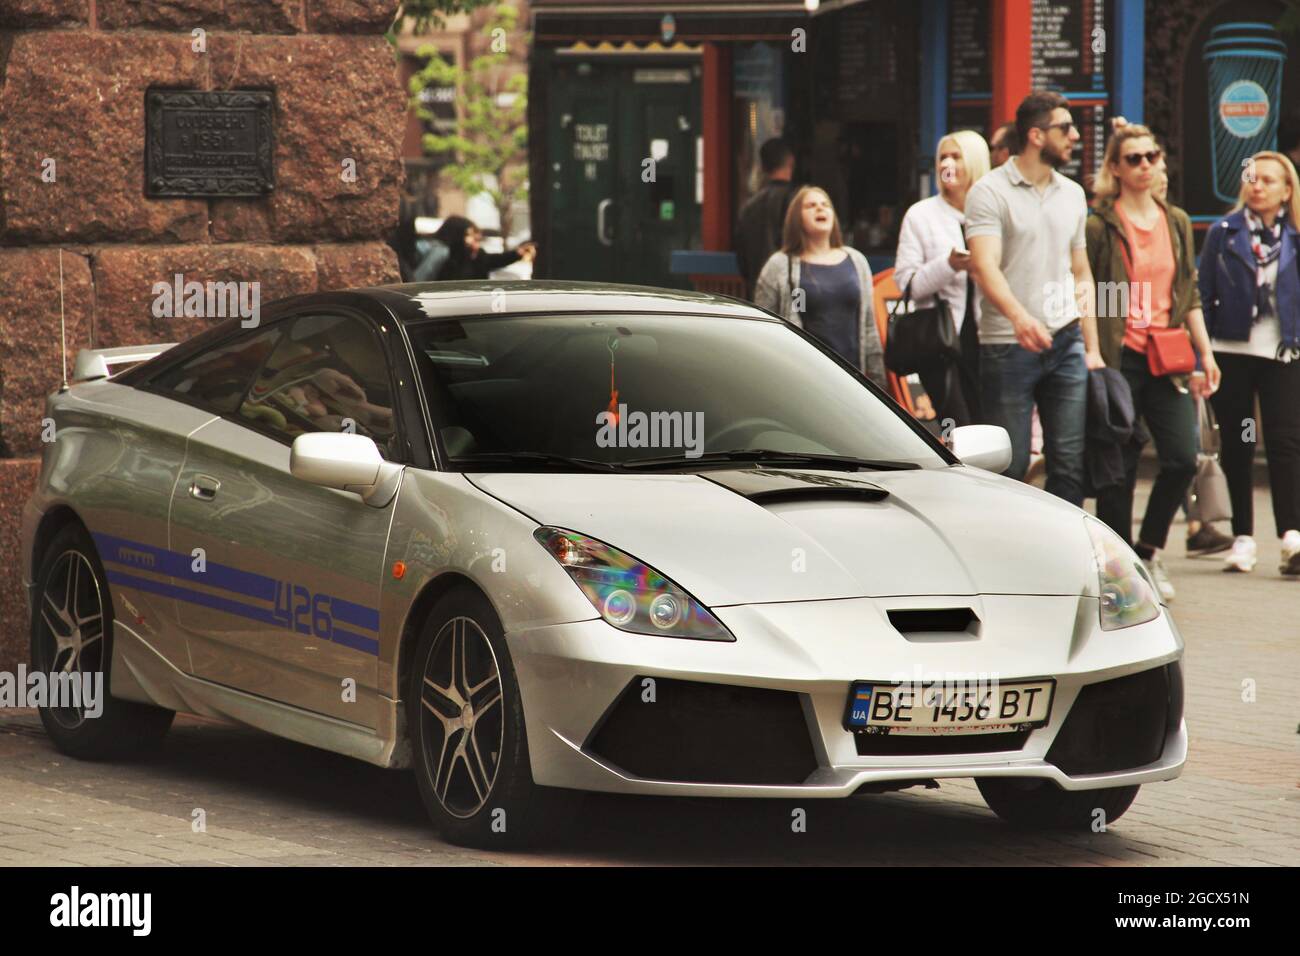 Kiev, Ukraine - May 3, 2019: Toyota Celica sports car in the city center Stock Photo